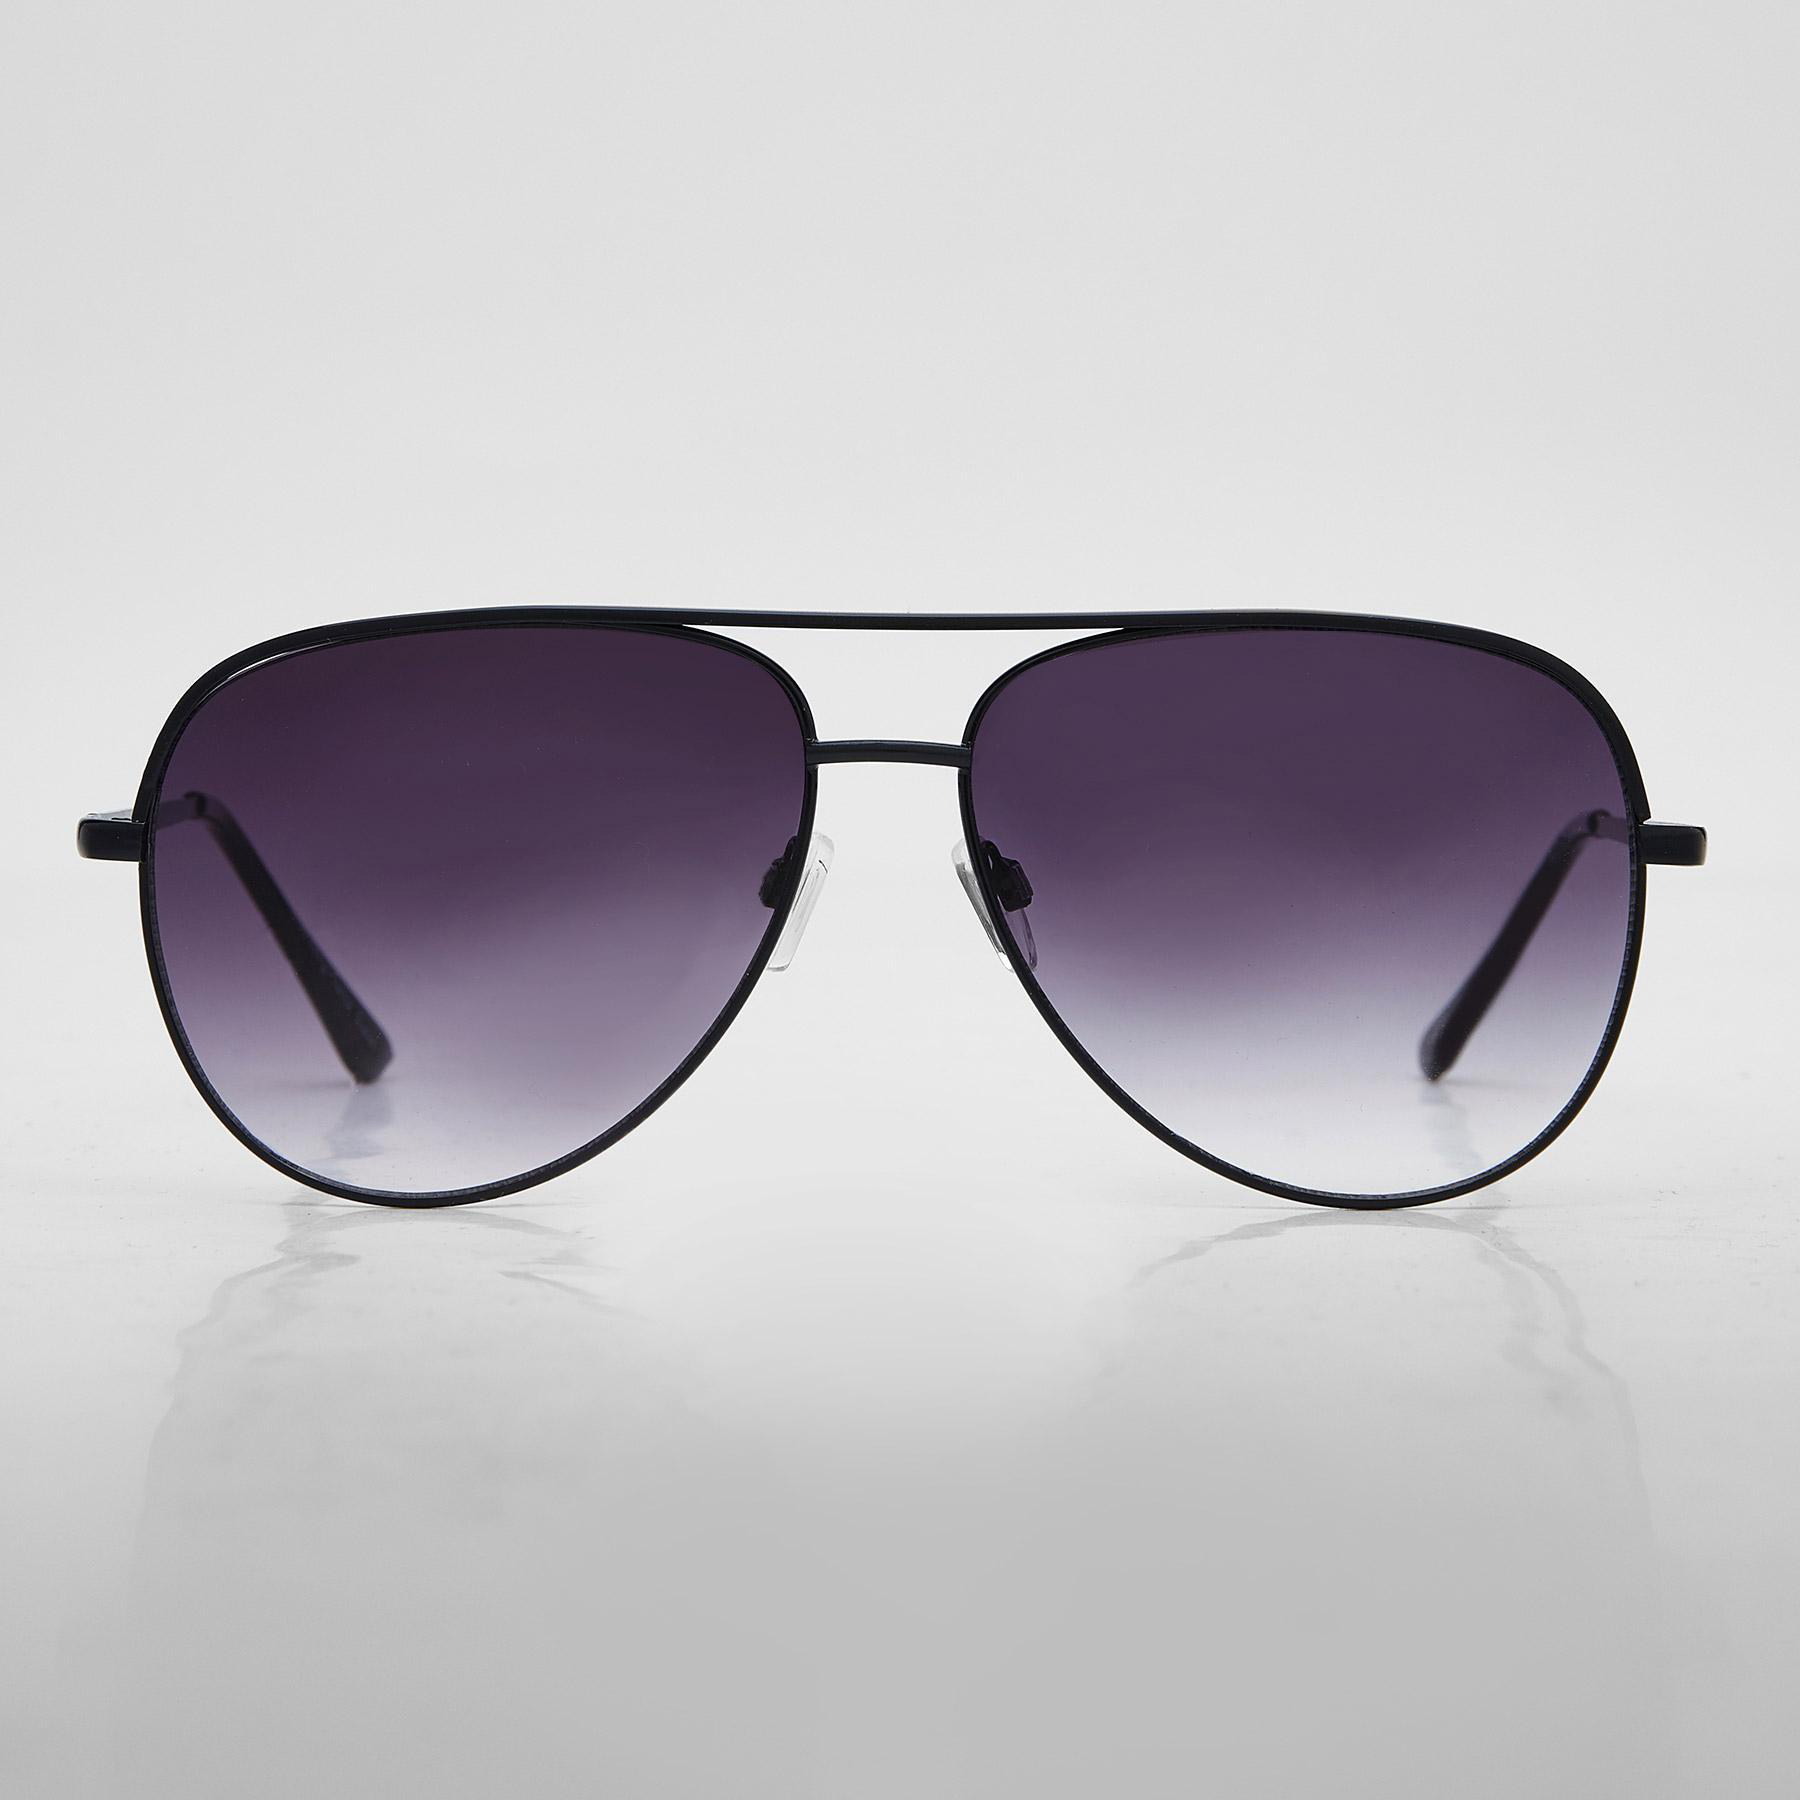 Indie Eyewear Lombok Sunglasses In Black Fade - Fast Shipping & Easy ...